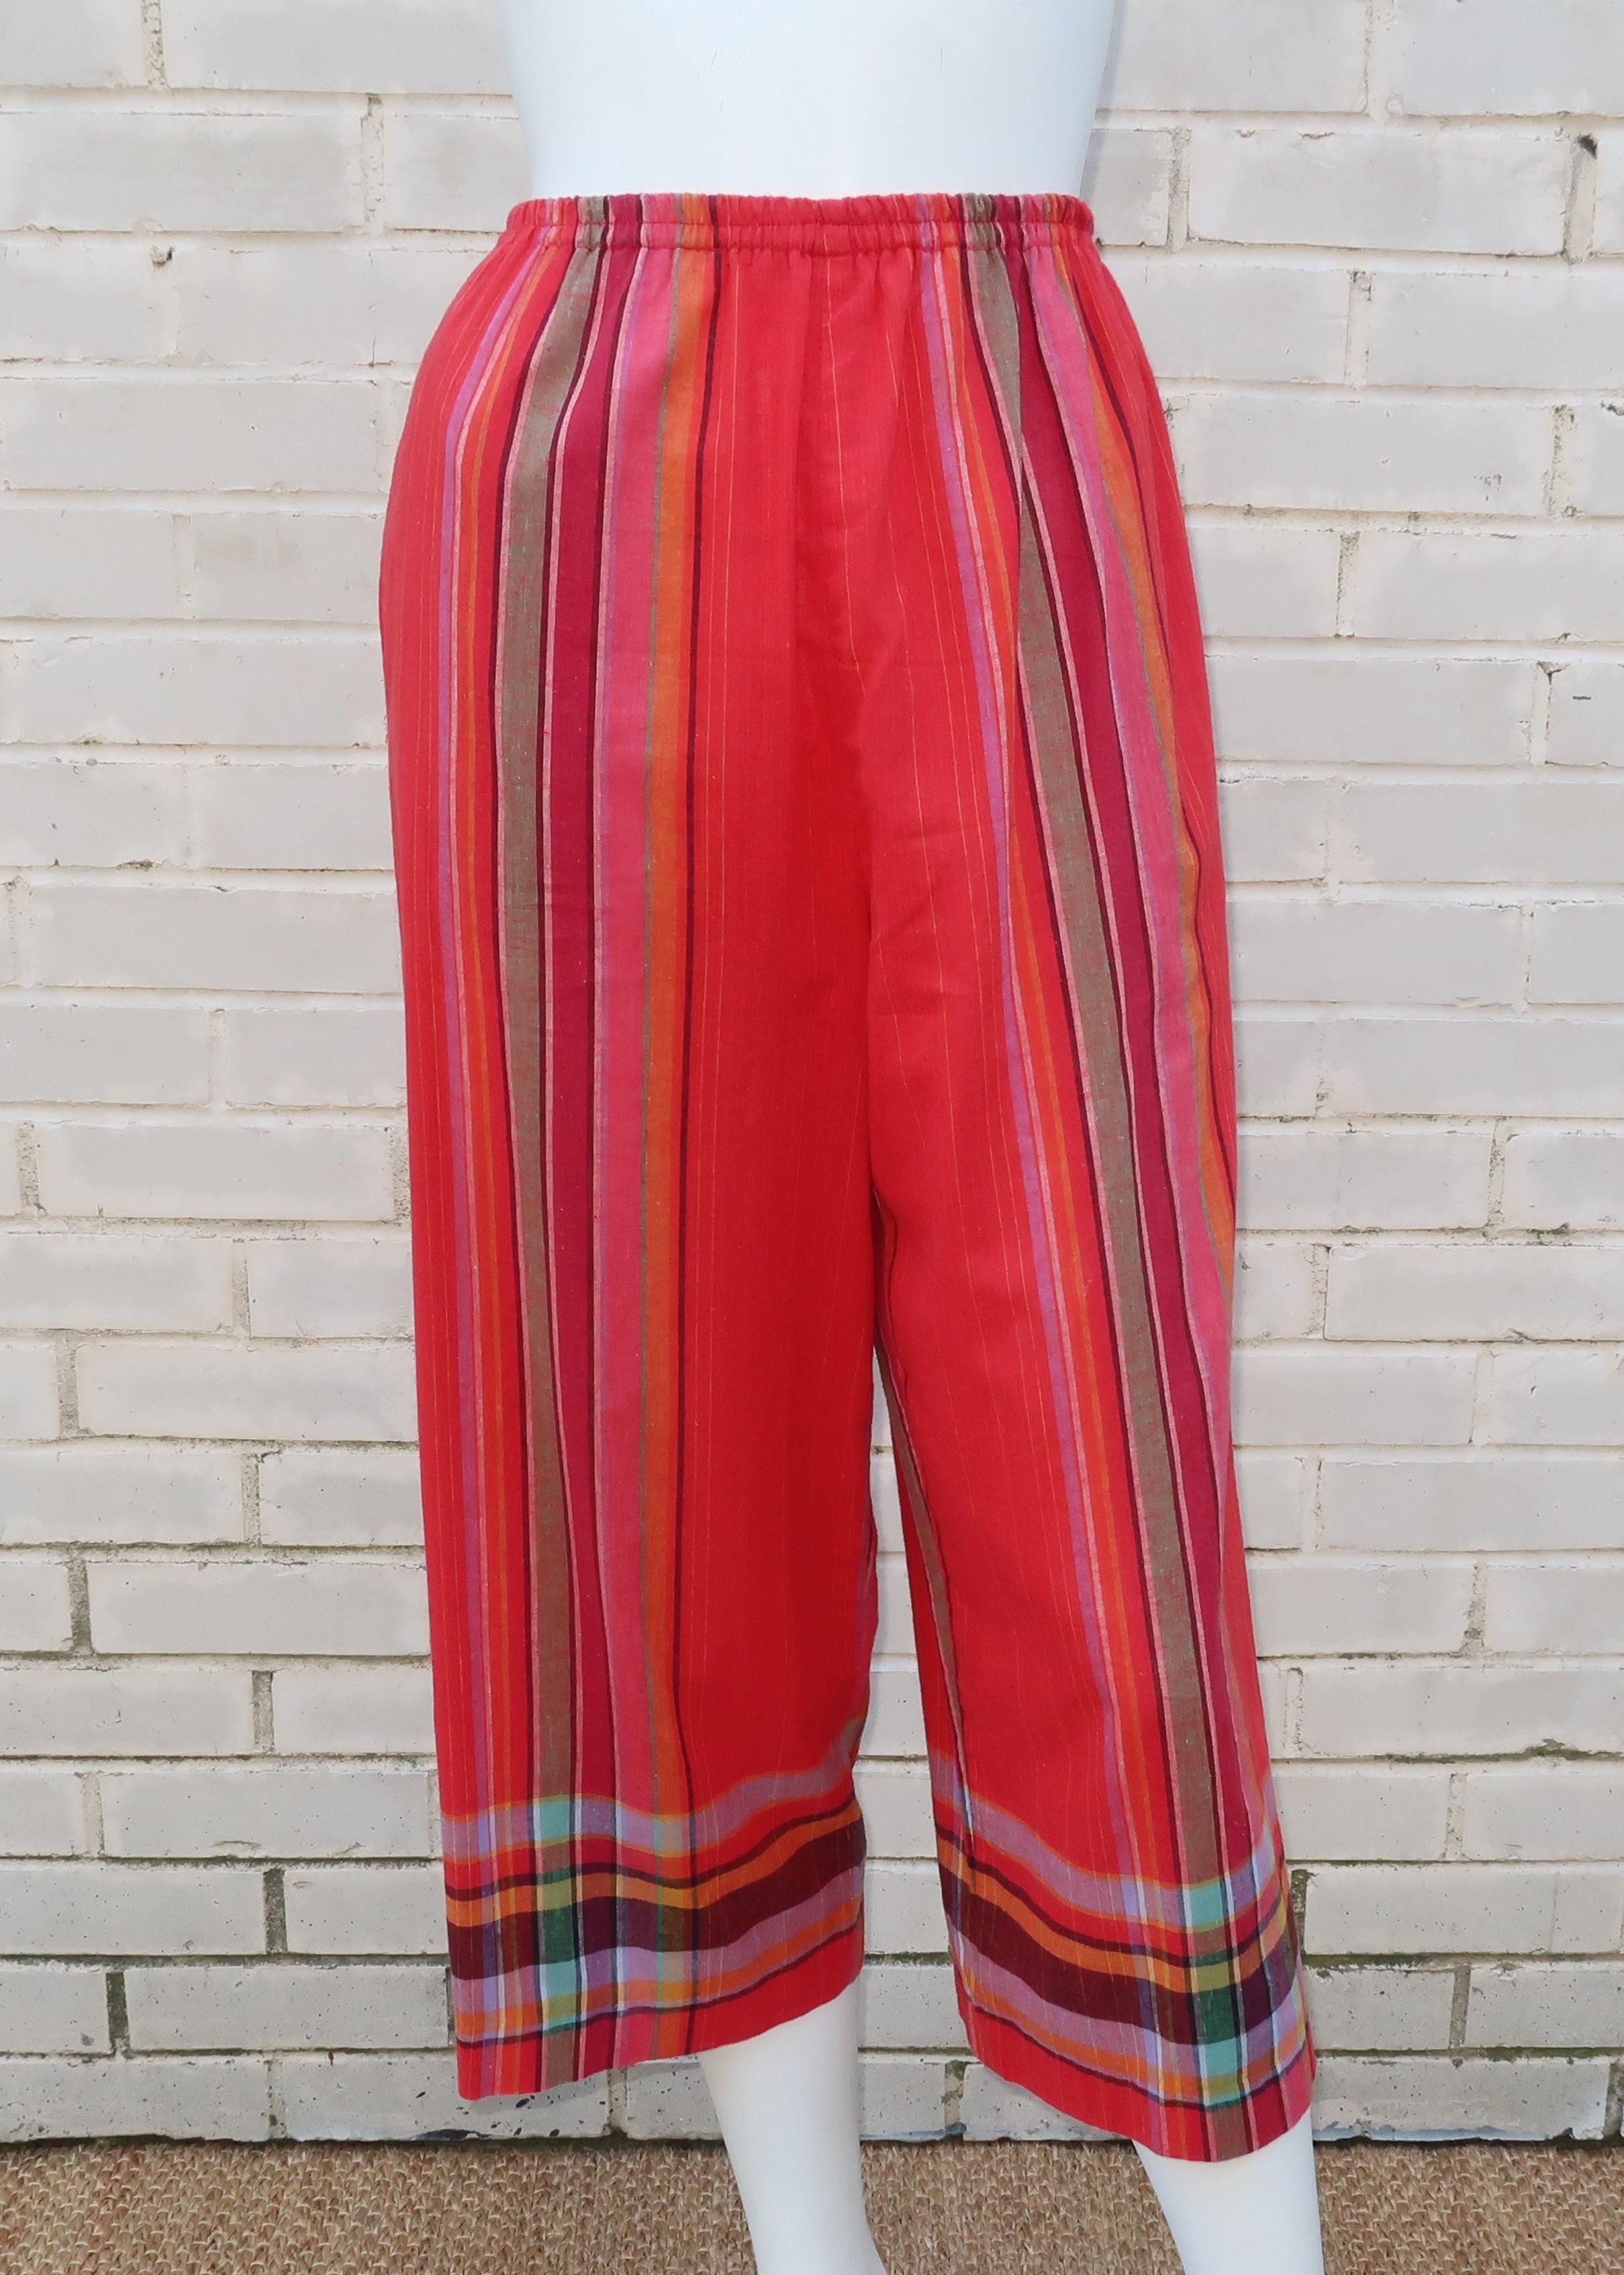 Patti Cappalli California Two Piece Madras Sun Suit, 1970's  6